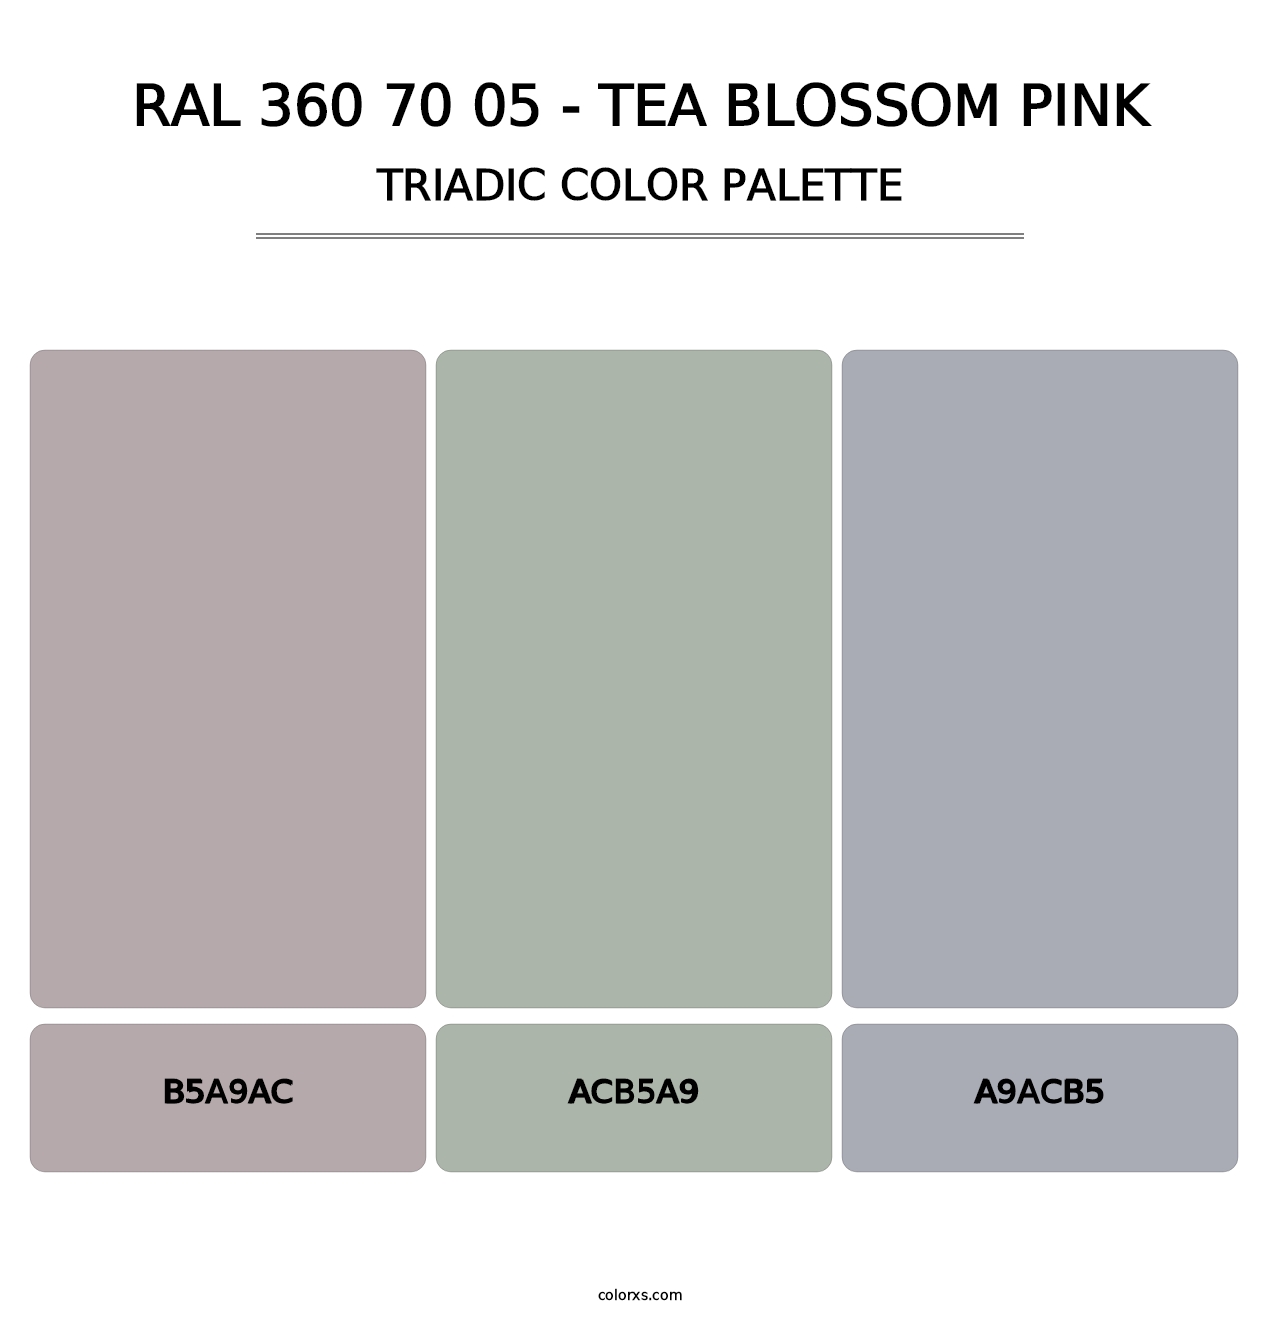 RAL 360 70 05 - Tea Blossom Pink - Triadic Color Palette